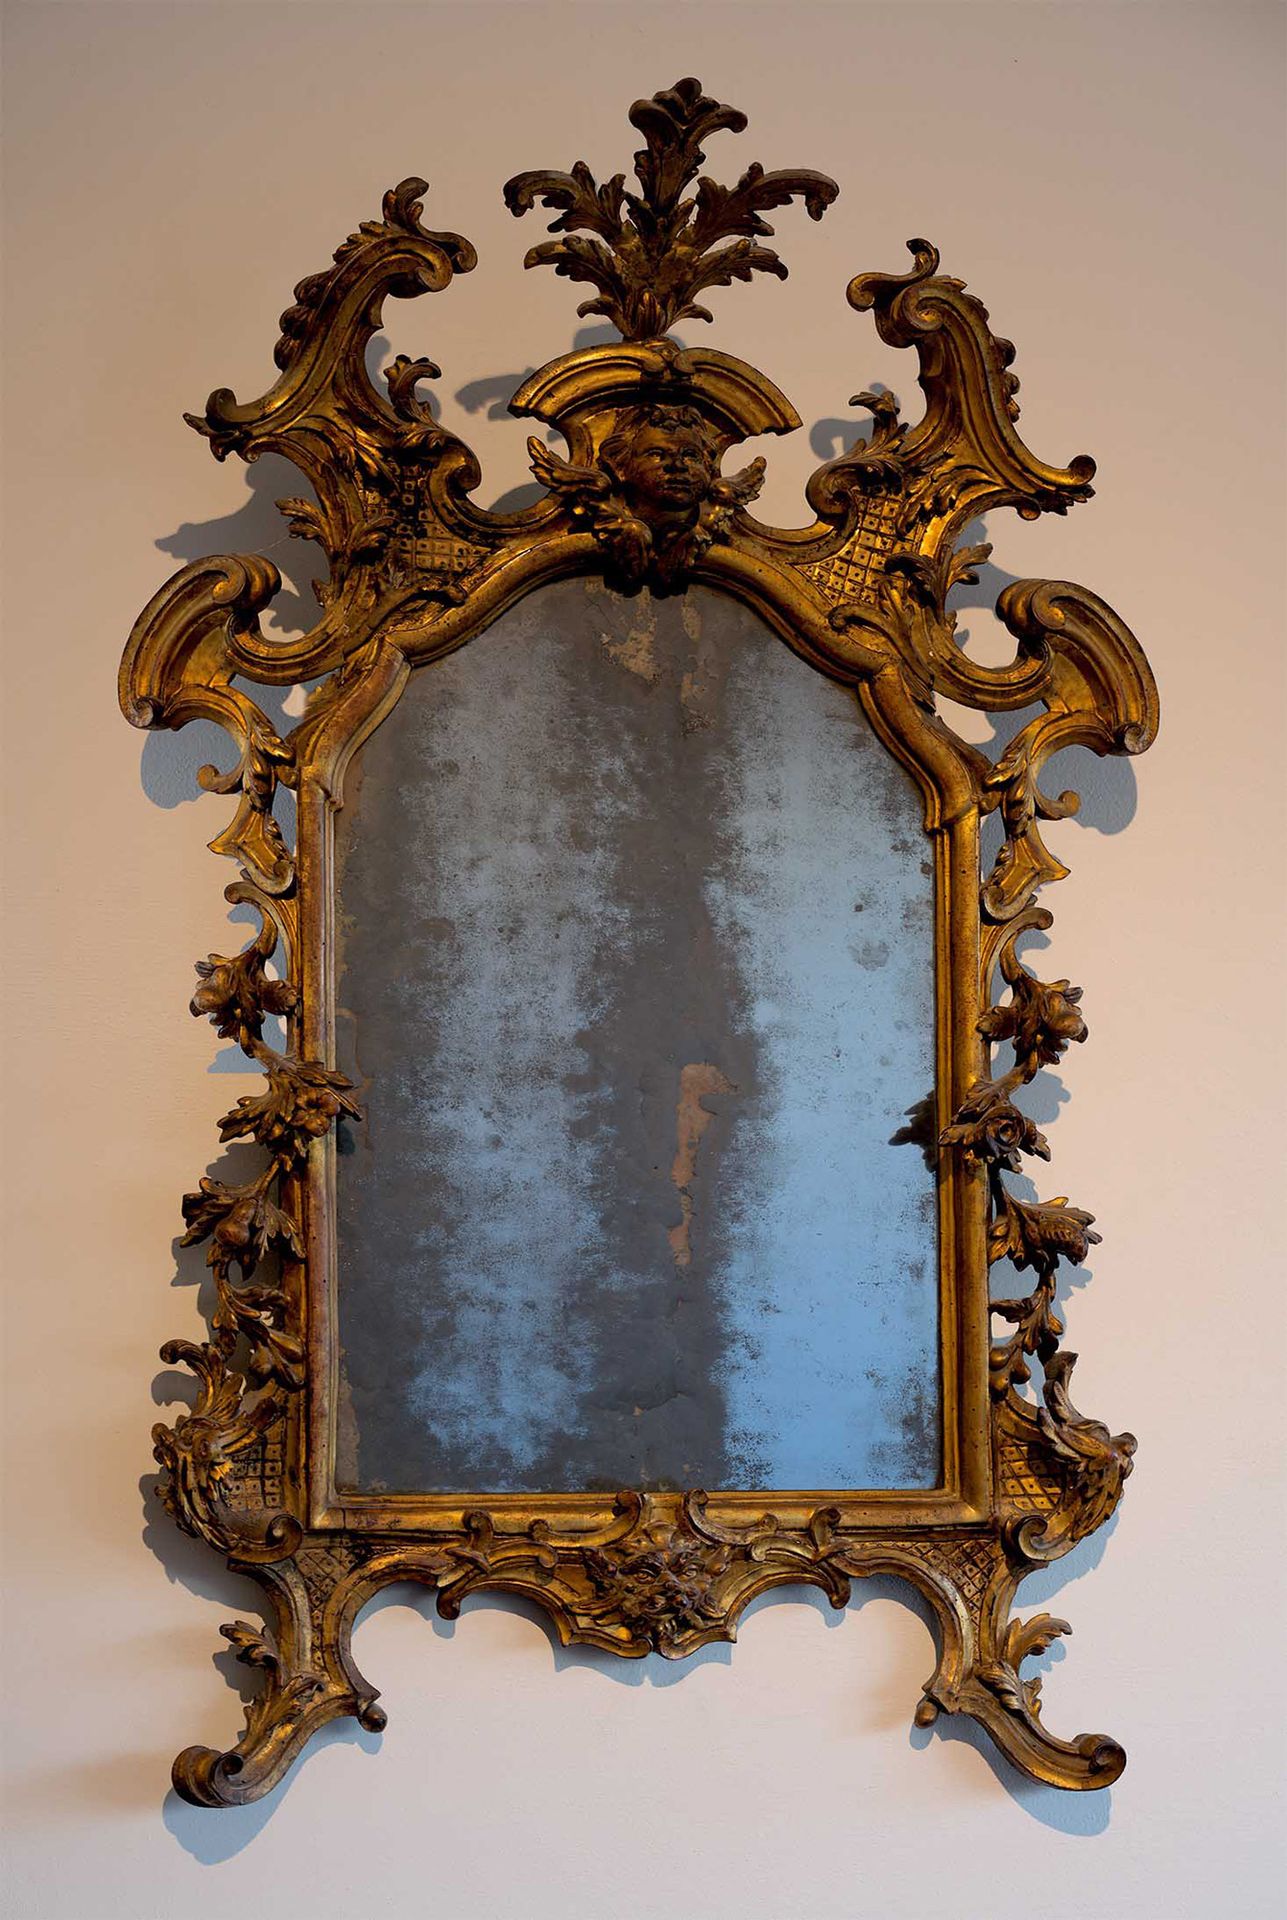 Null 重要的镜子

佛罗伦萨 18世纪上半叶

丰富的雕刻和镀金的木头；破损的拱门以圆雕的有翼的普陀头为中心，在植物的涡流中，沿着两侧落下花卉的总状花序，下&hellip;